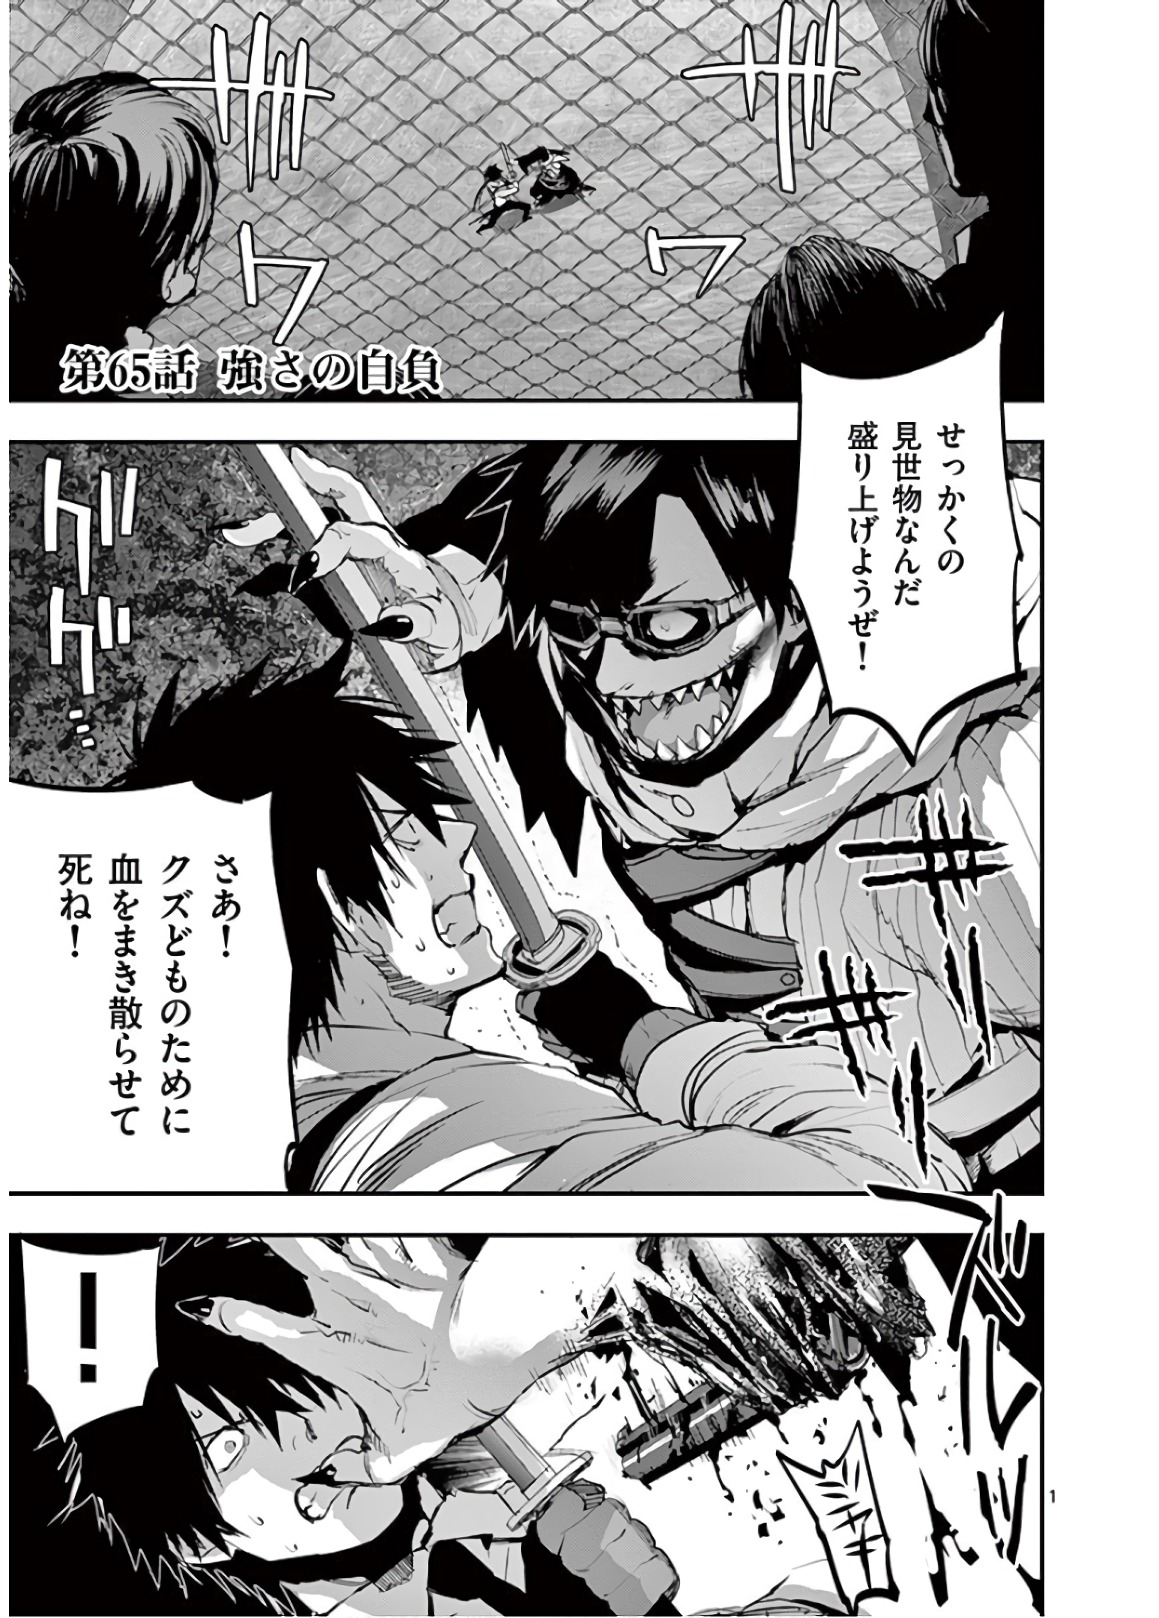 Ginrou Bloodborne - Chapter 65 - Page 1